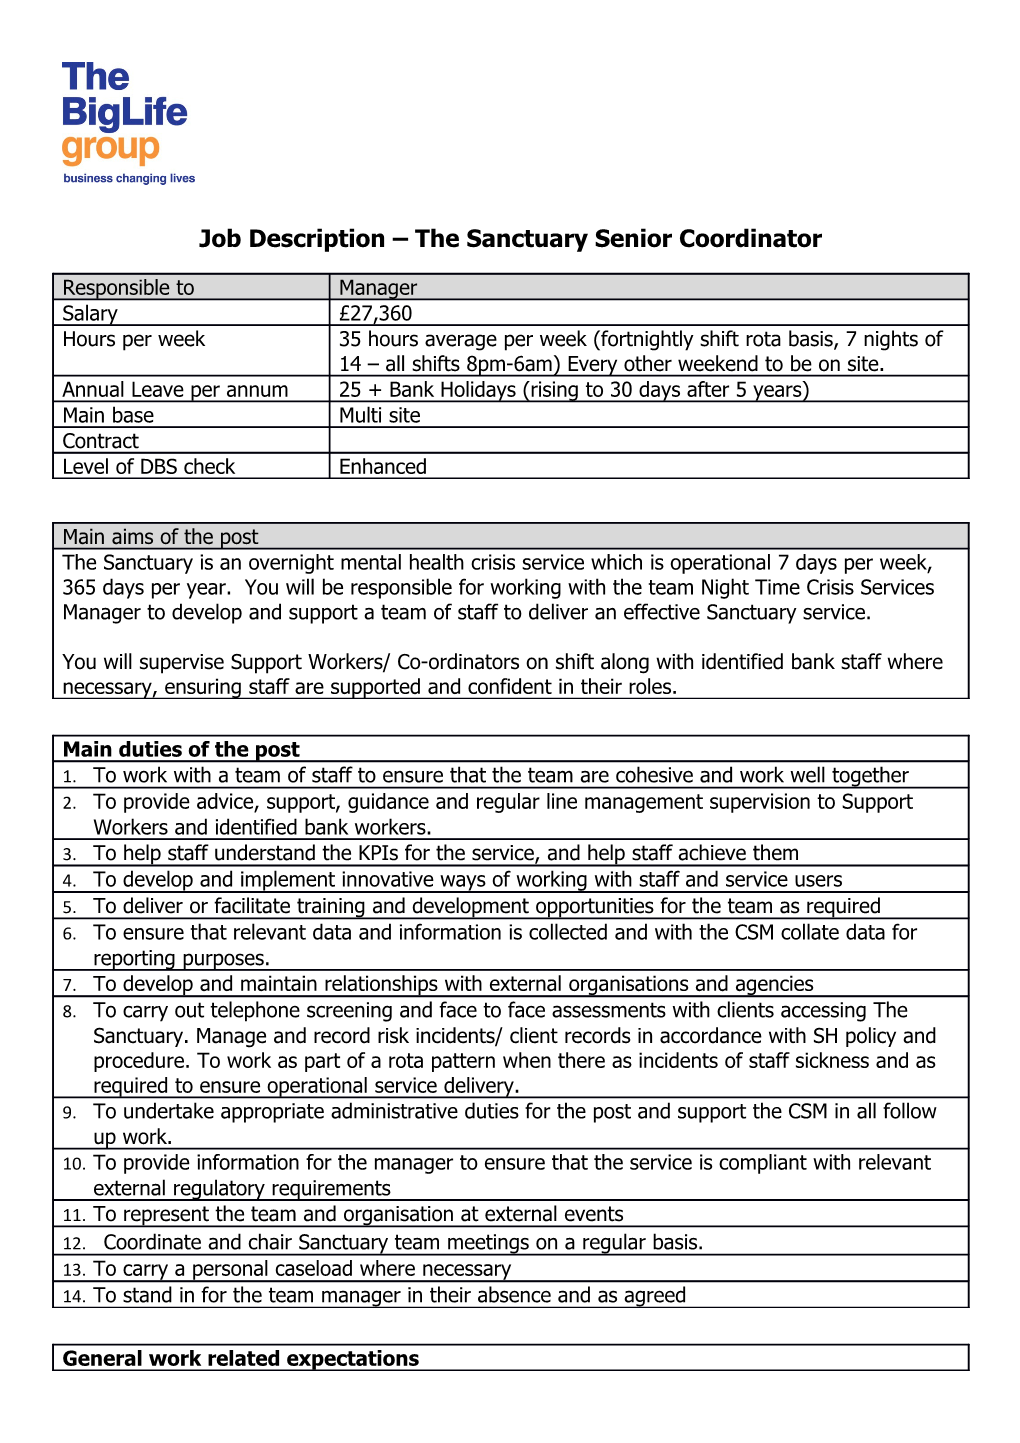 Job Description the Sanctuary Senior Coordinator